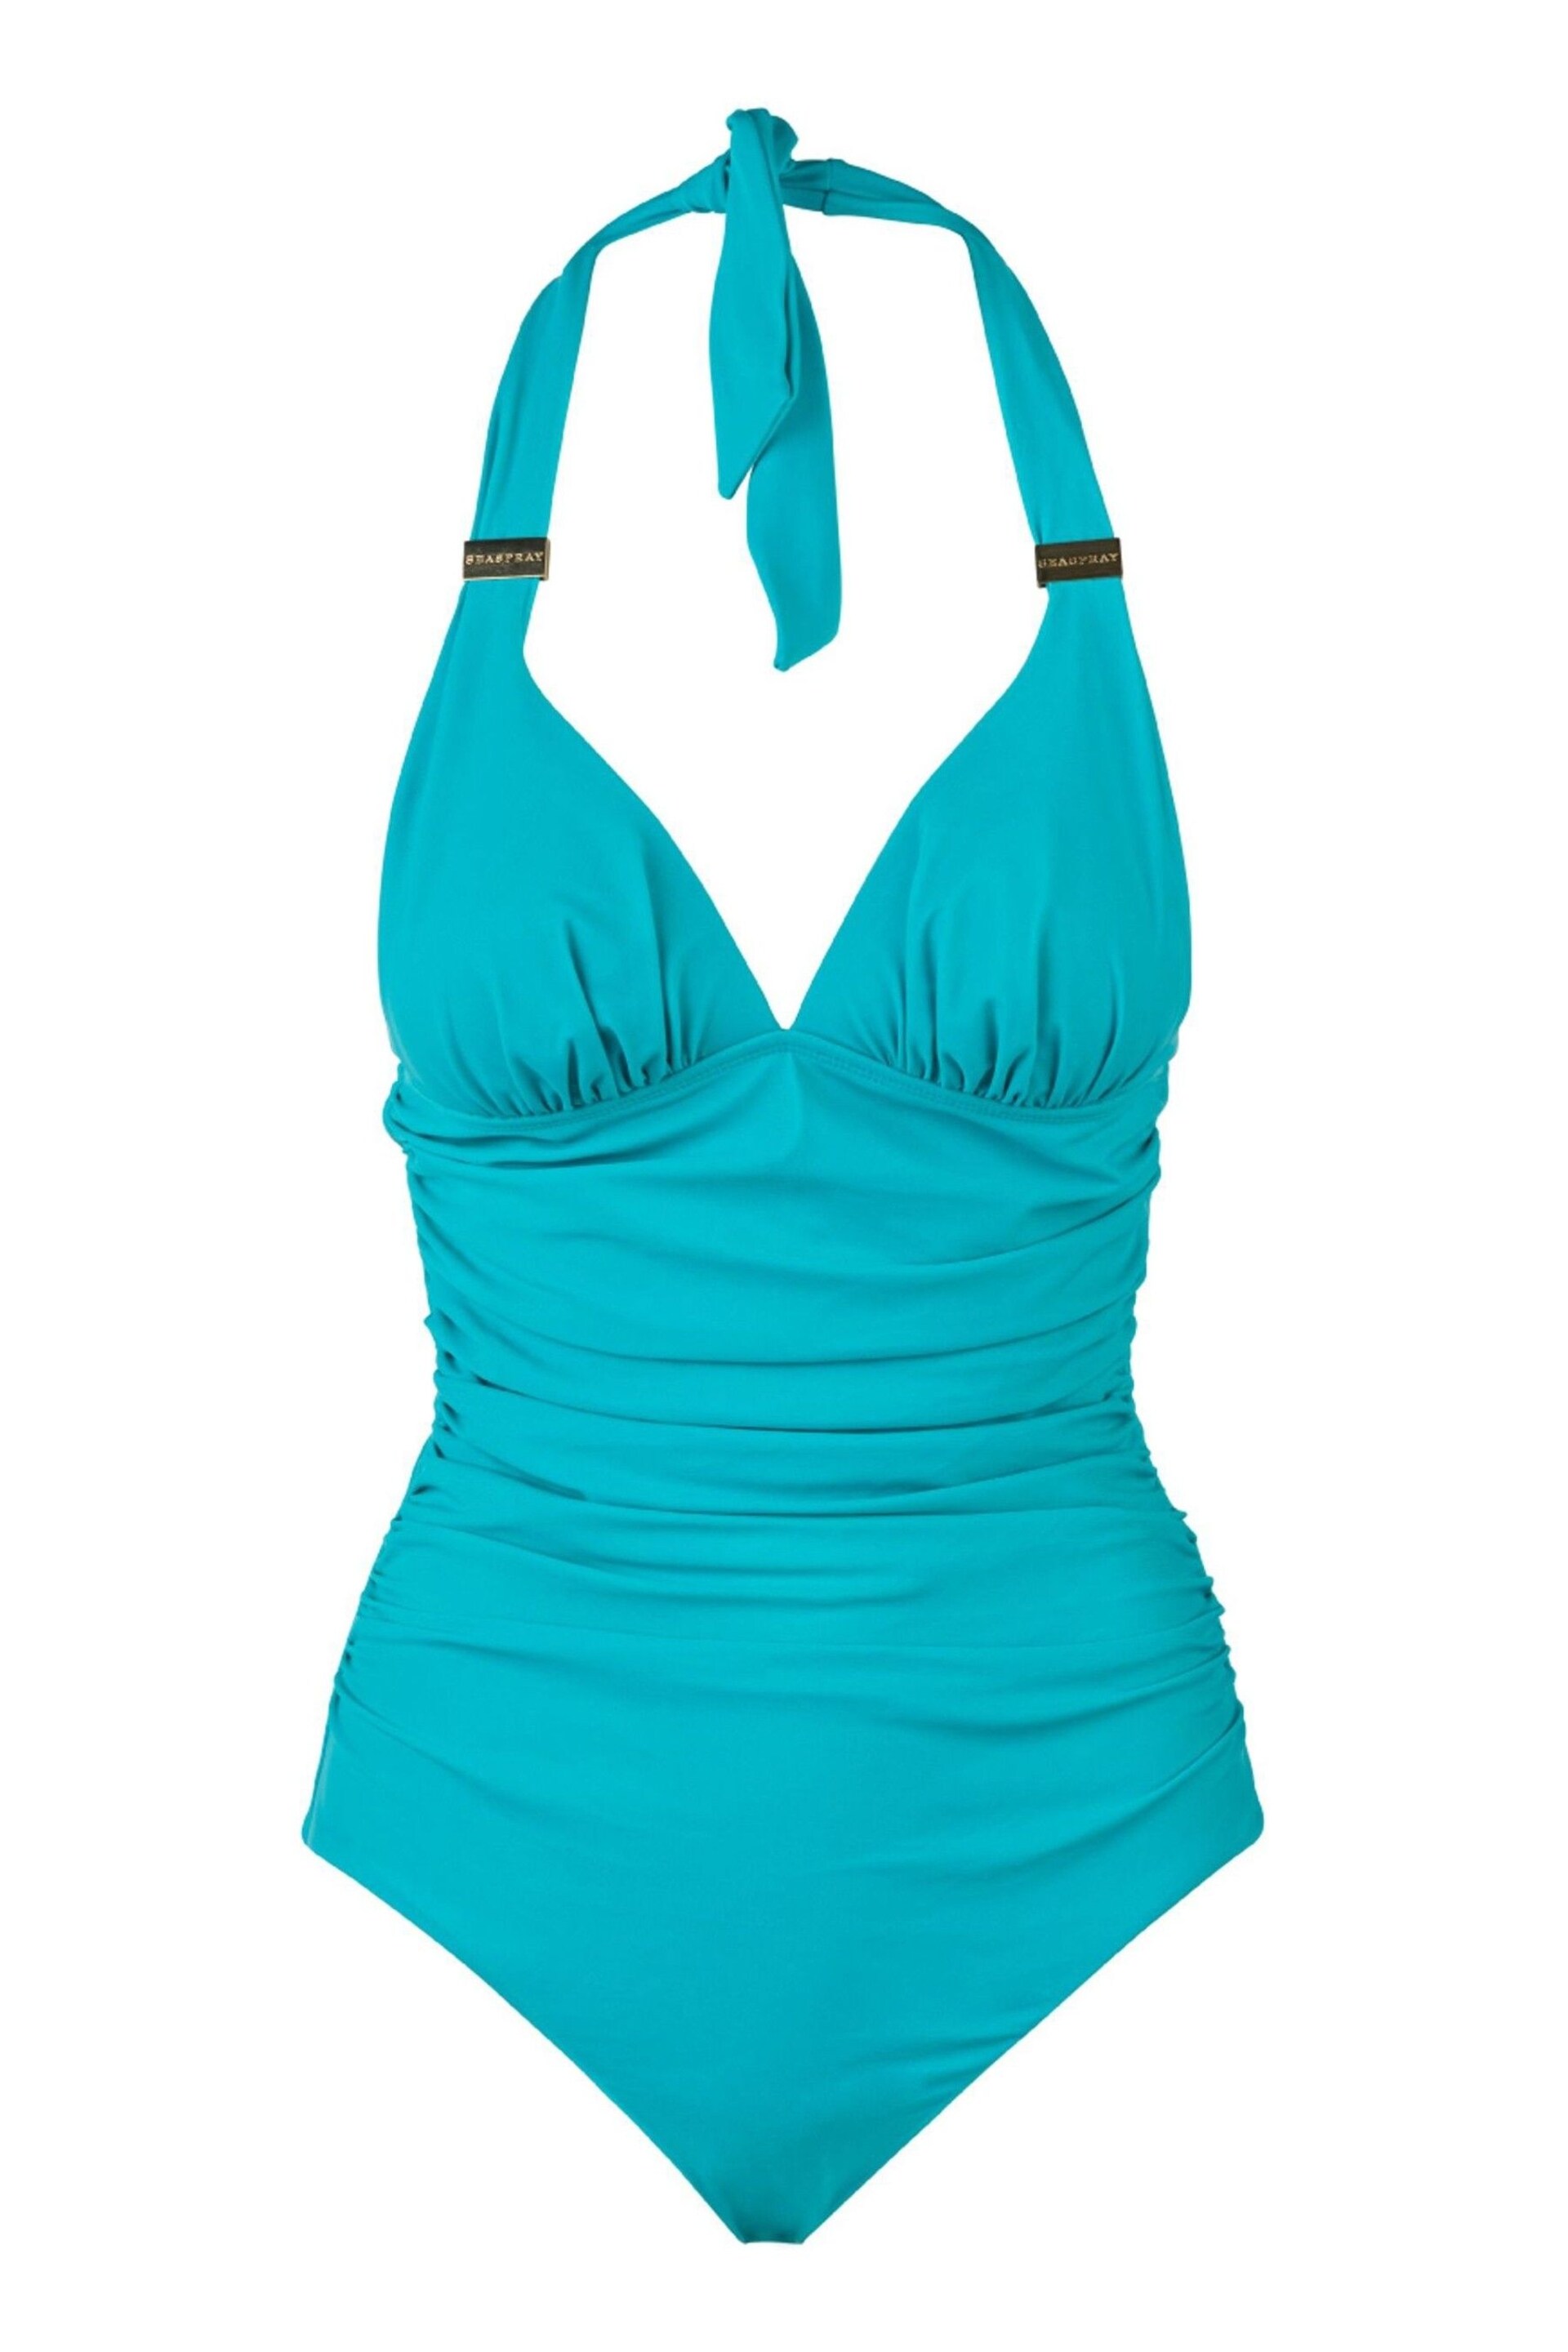 Seaspray Aqua Blue Audrey Hourglass Halter Regular Length Swimsuit - Image 3 of 3